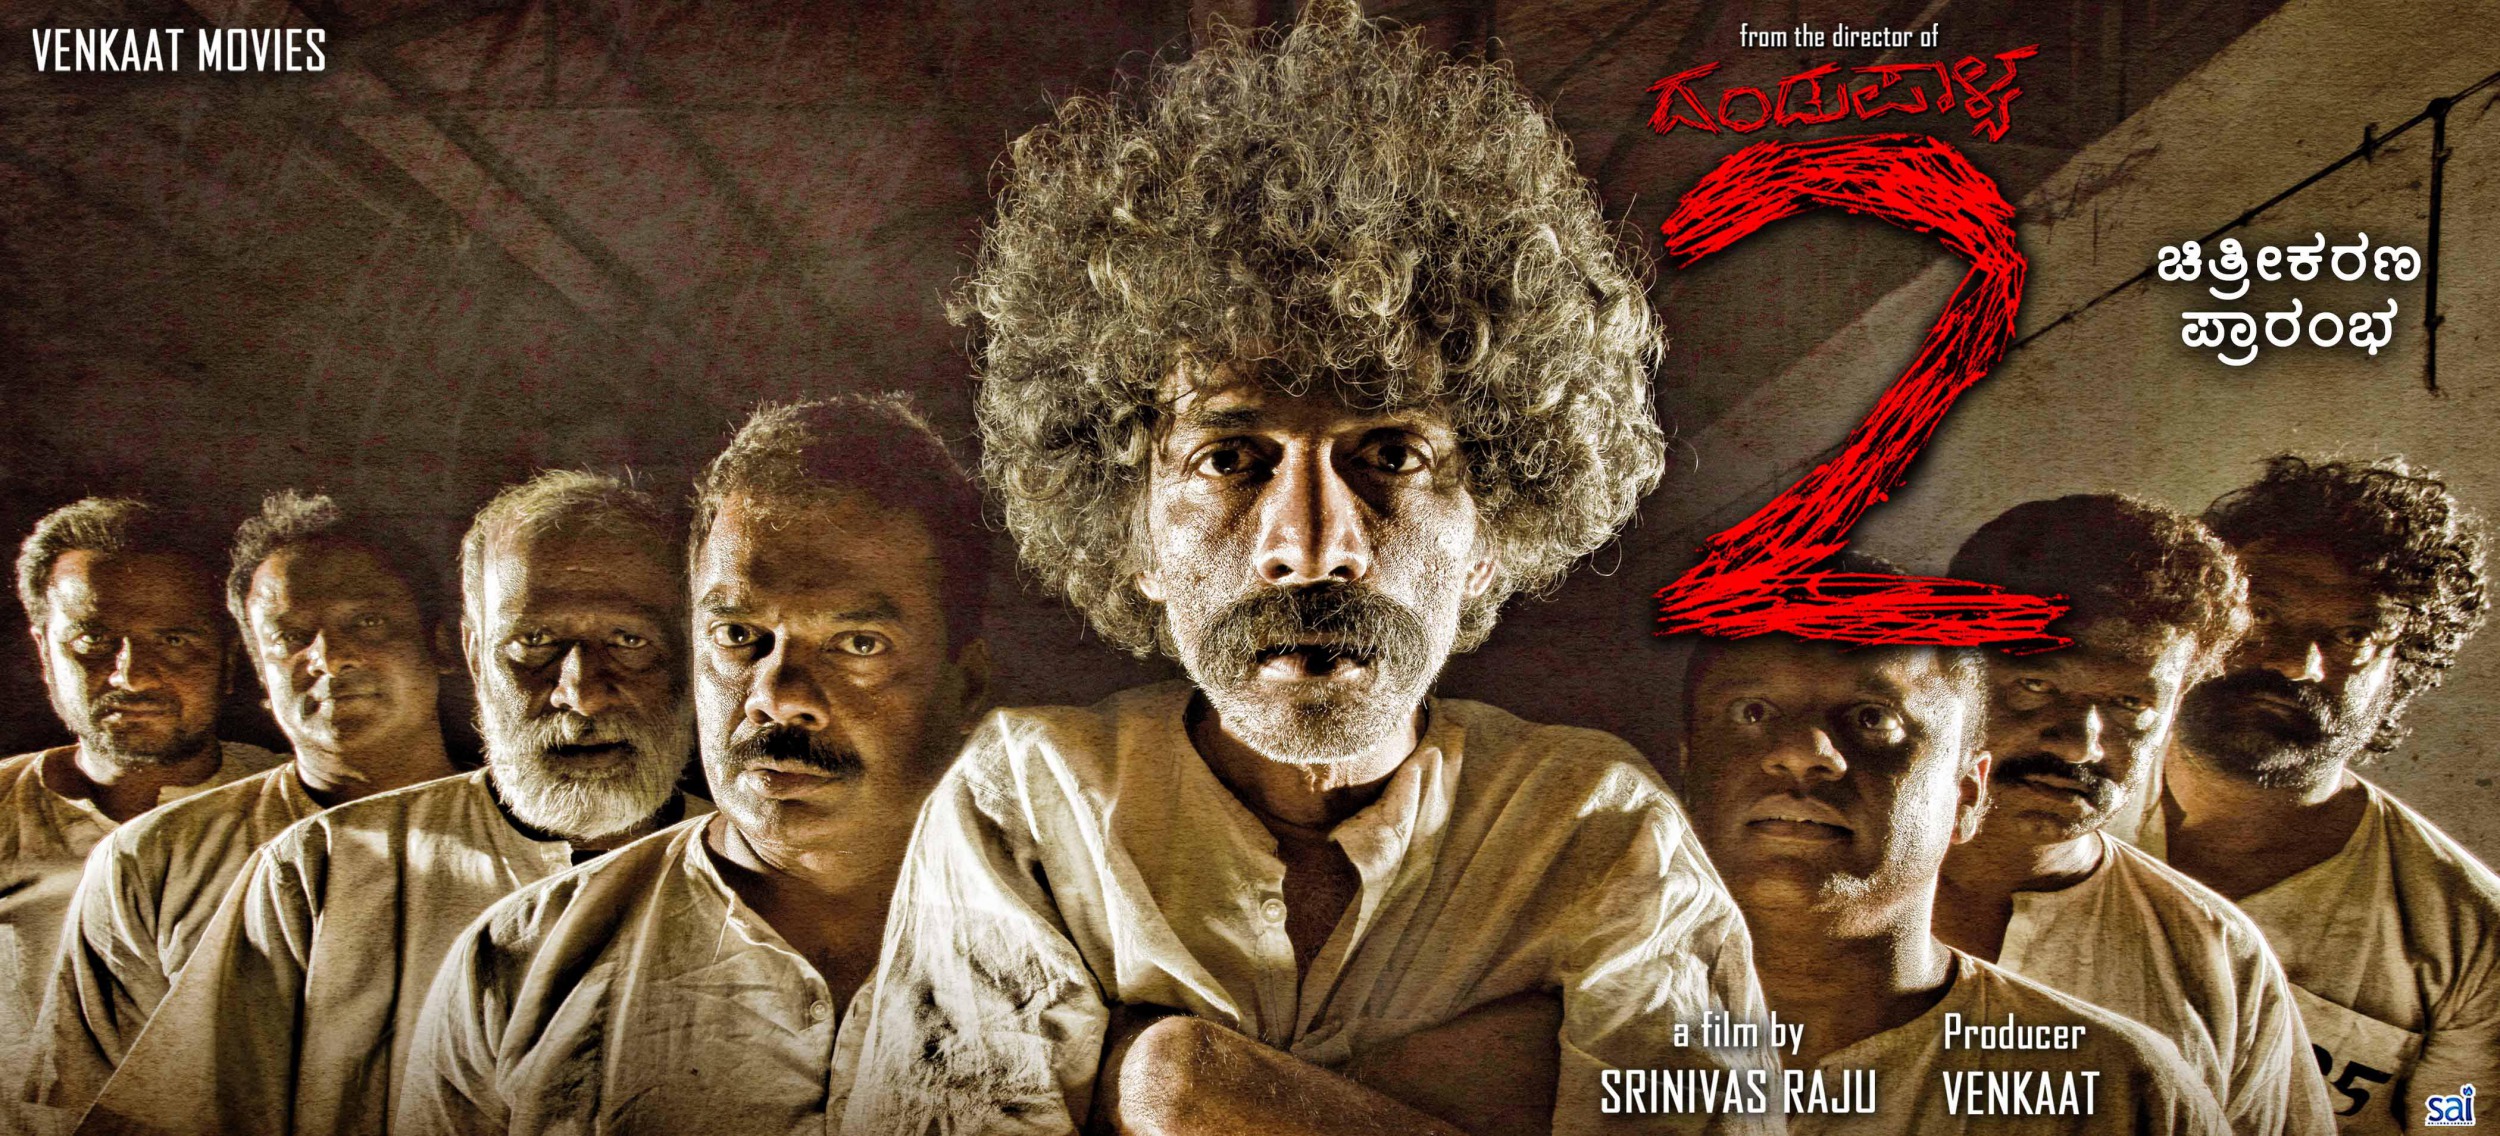 Mega Sized Movie Poster Image for Dhandupalya 2 (#8 of 8)